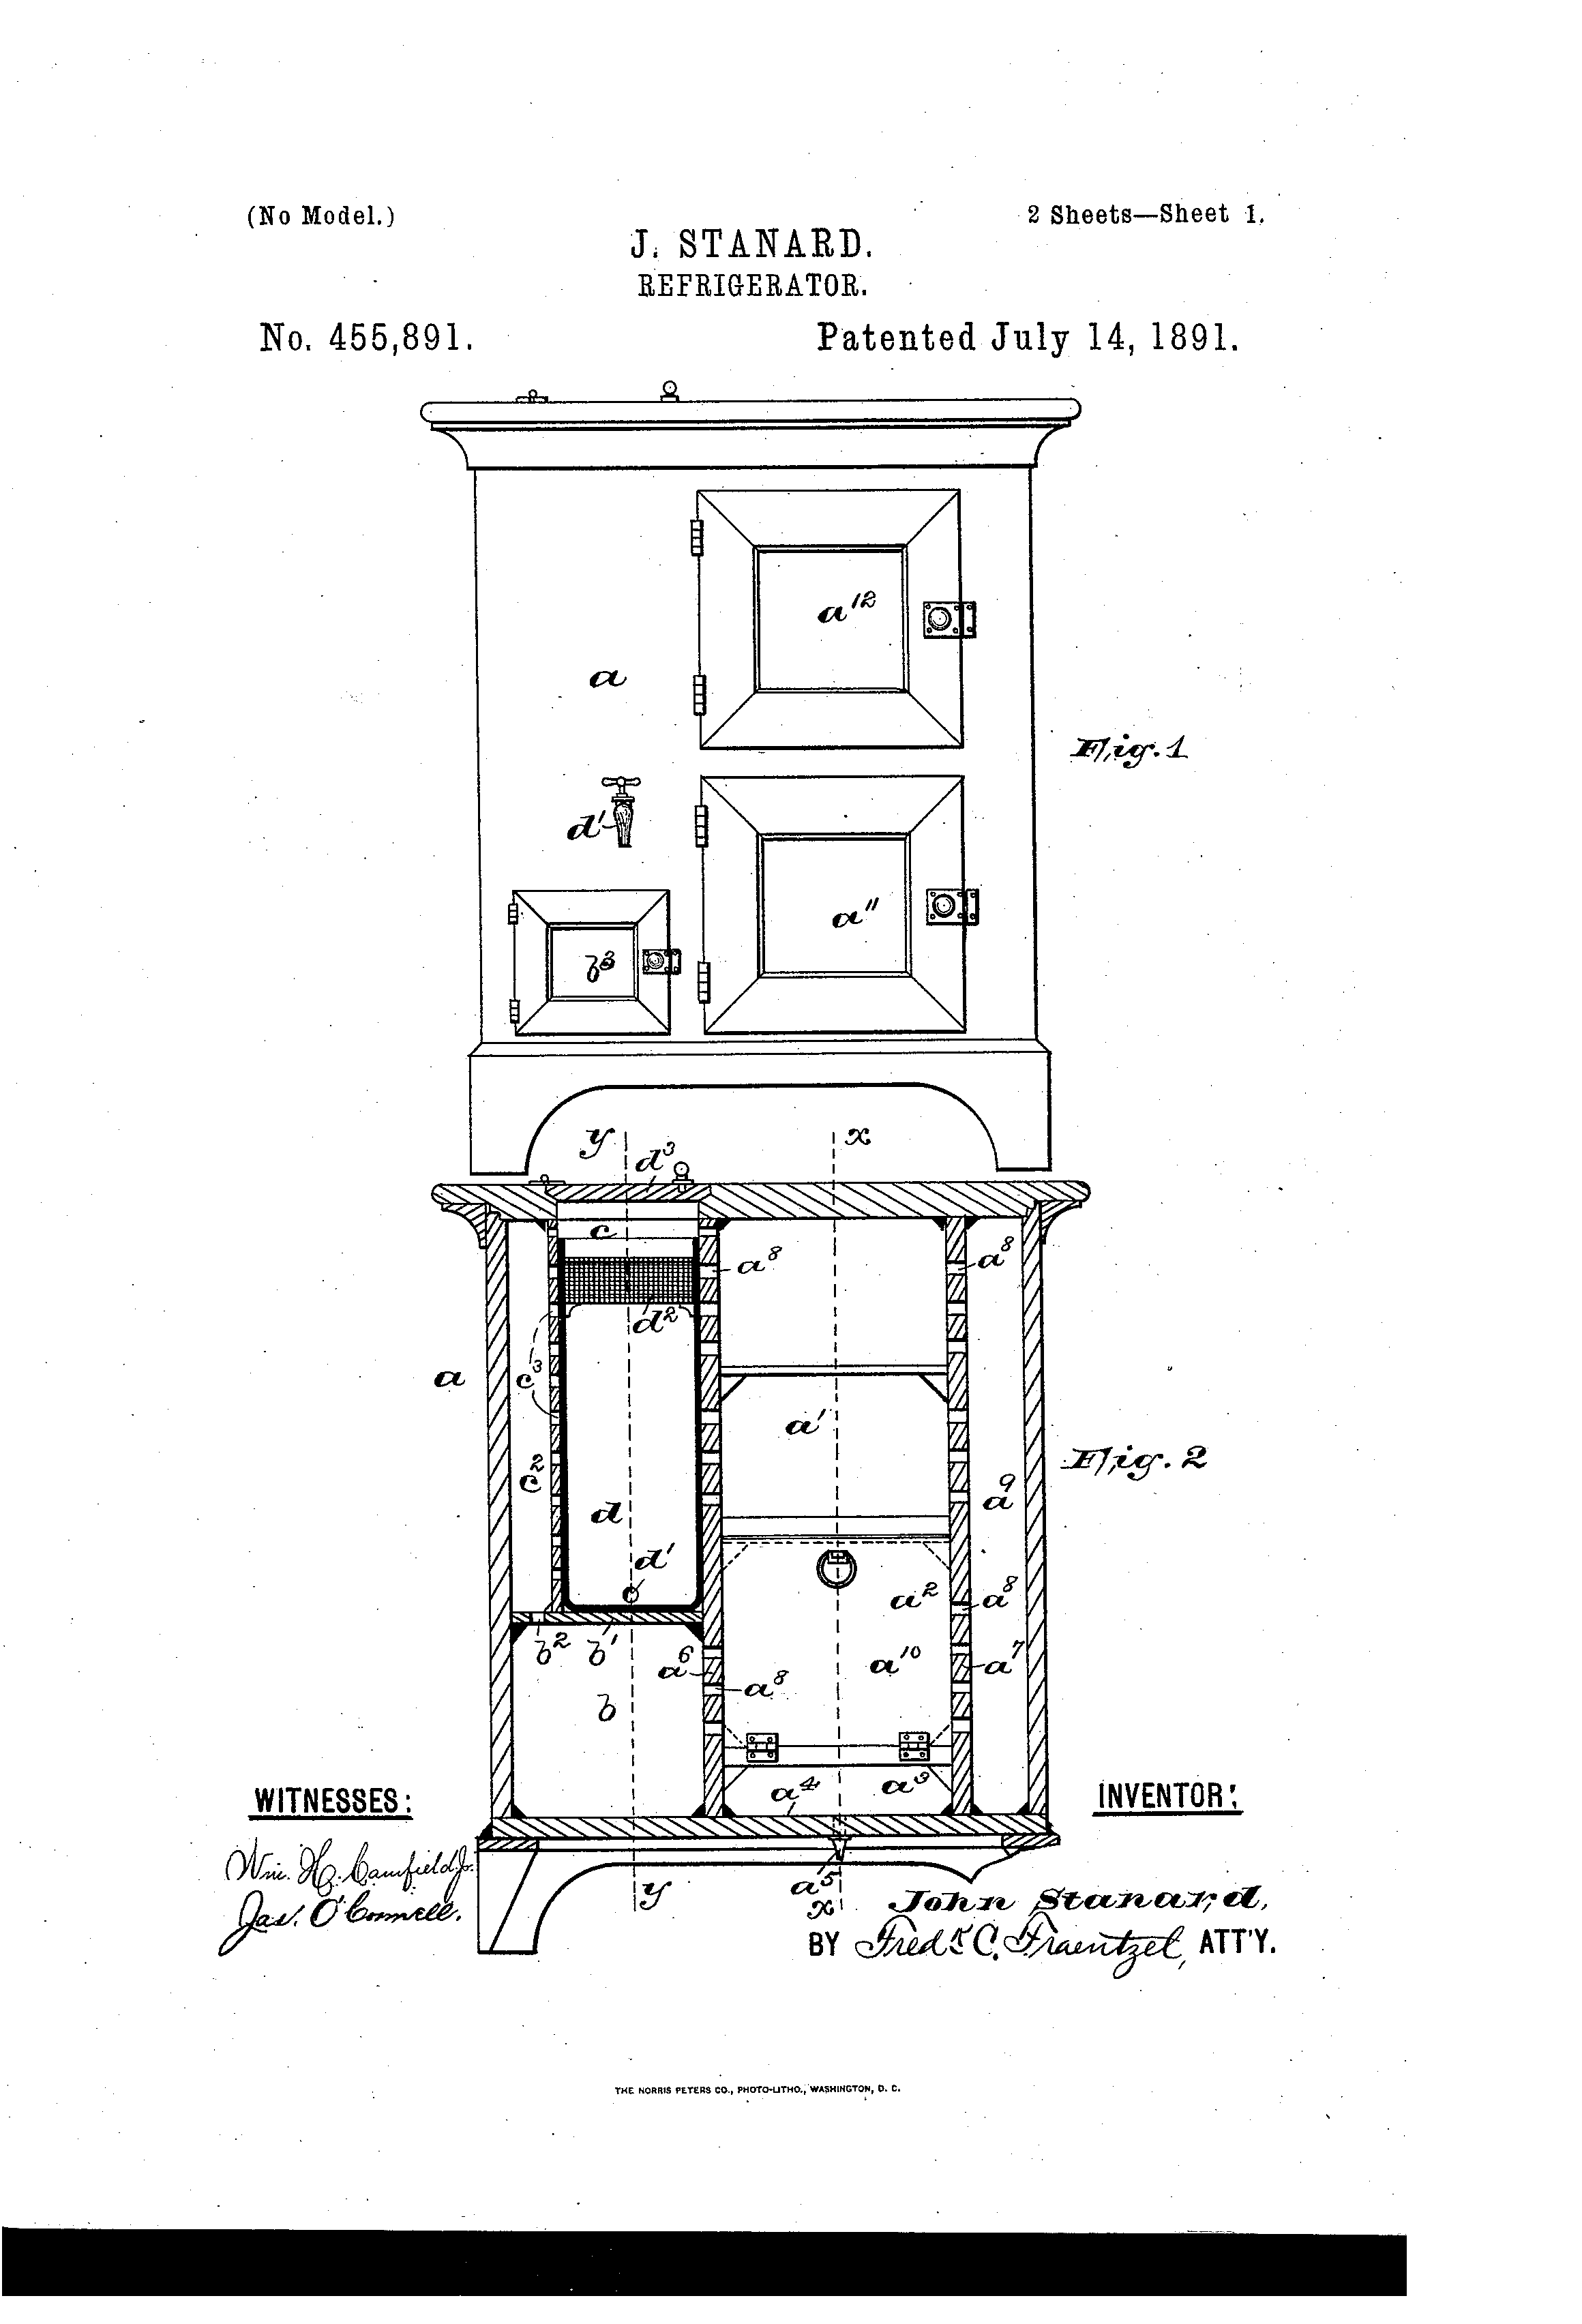 Patent illustration of Stanard's refrigerator, view 1